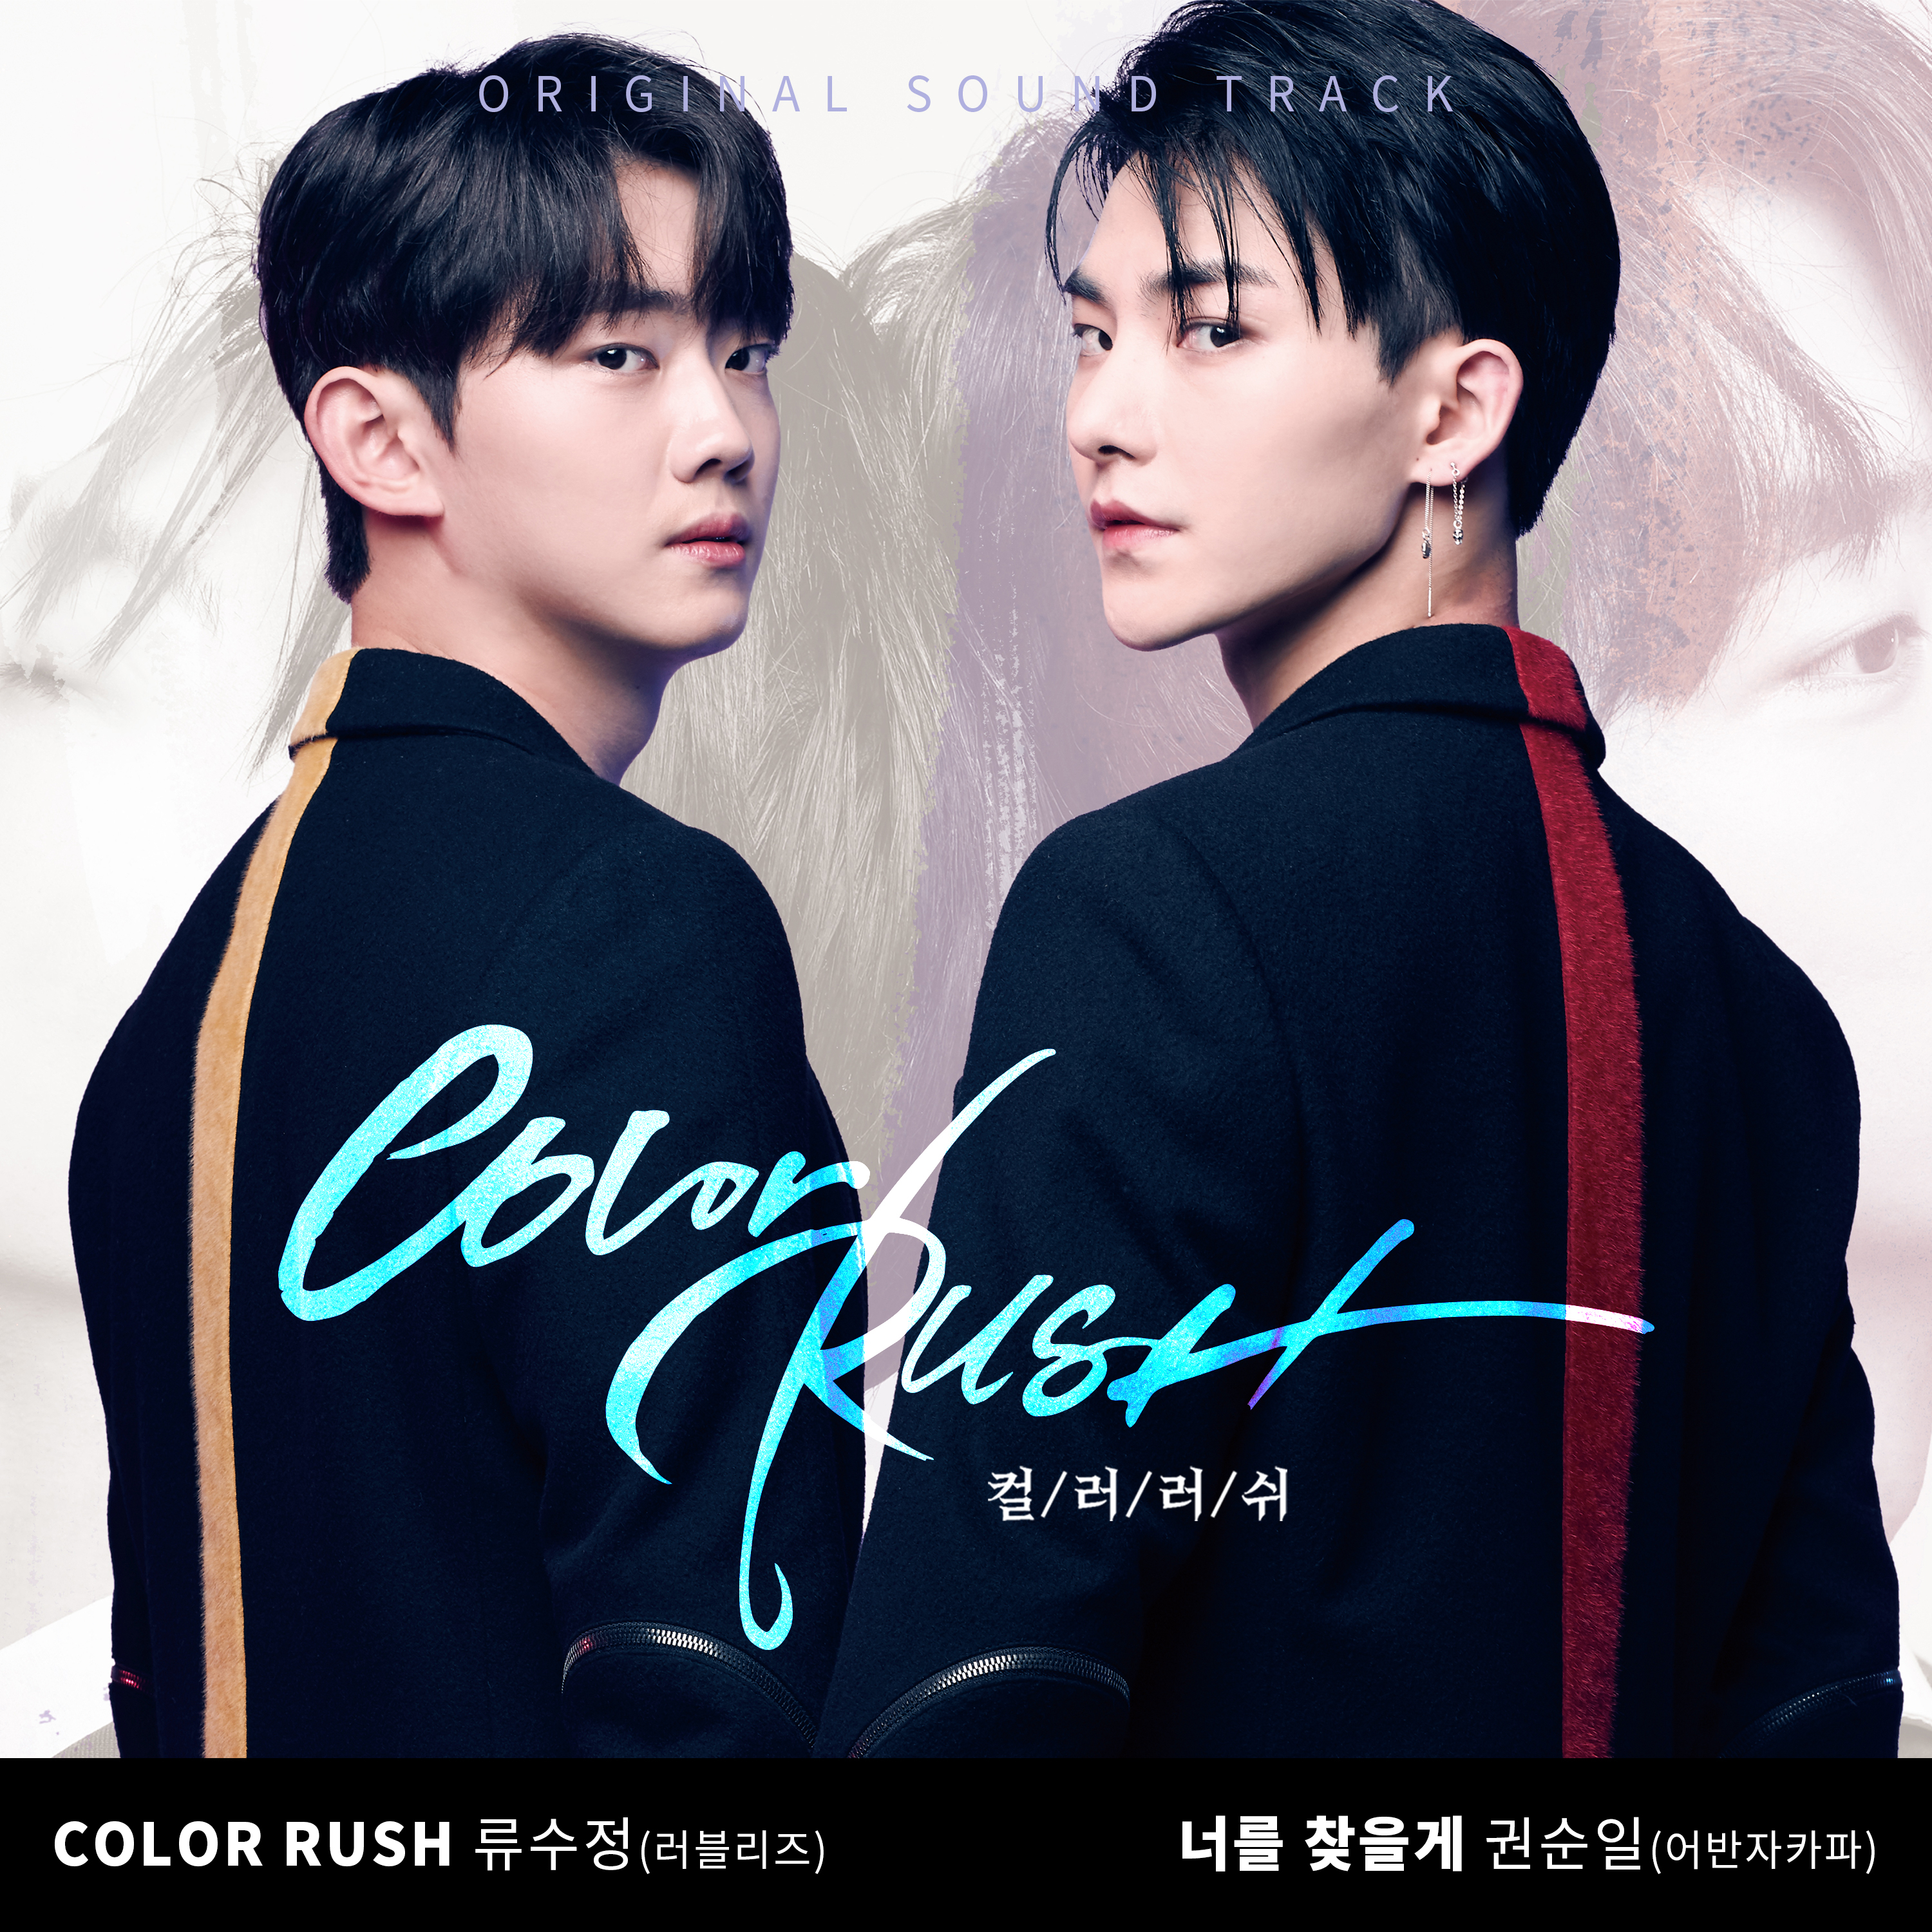 [情報] Color Rush OST - 柳洙正, 權順日